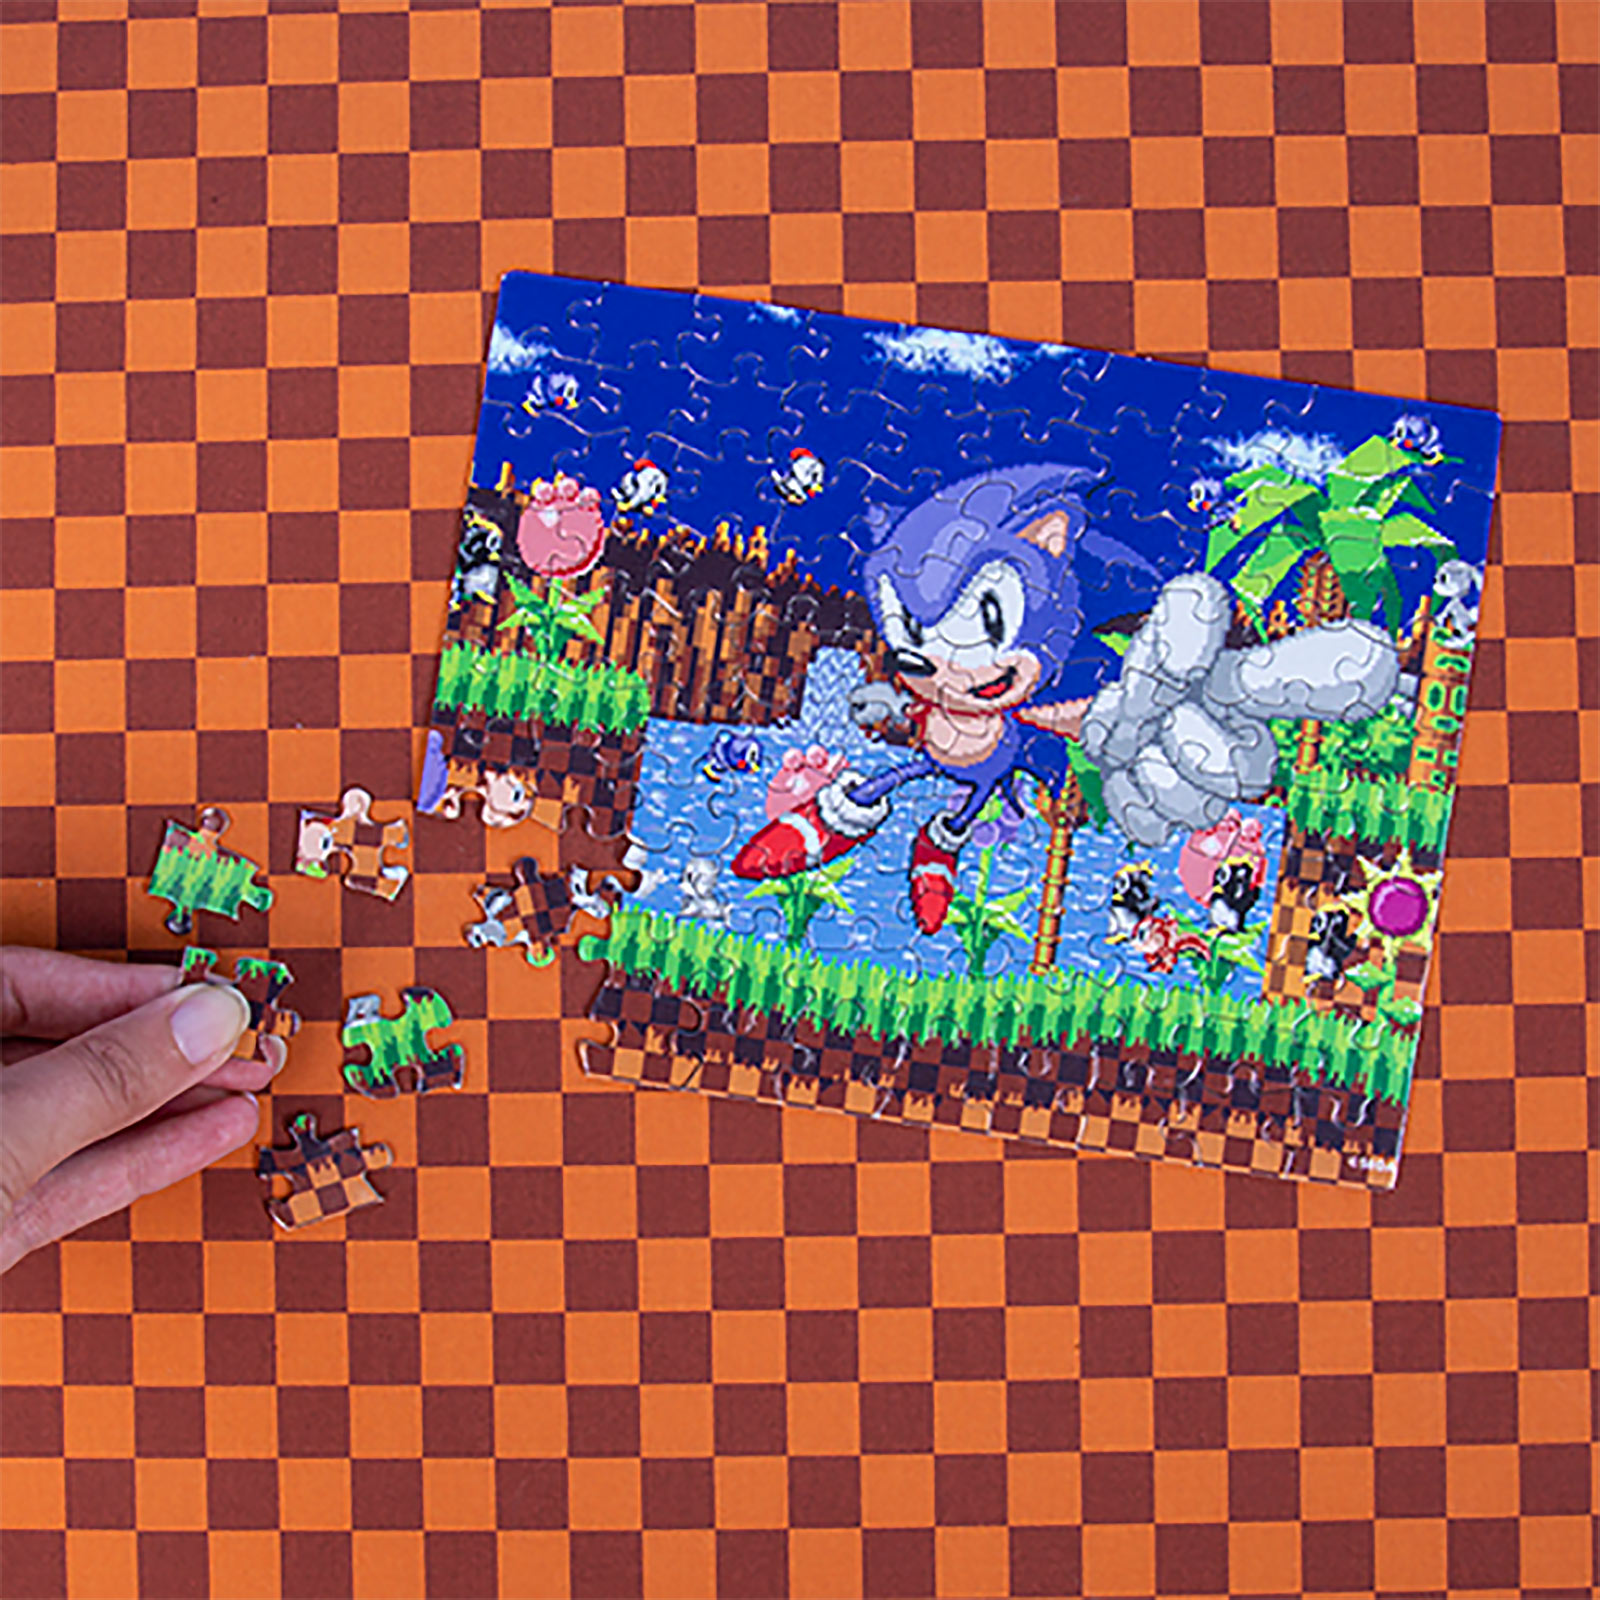 Sonic the Hedgehog - Gift Set Mug and Puzzle